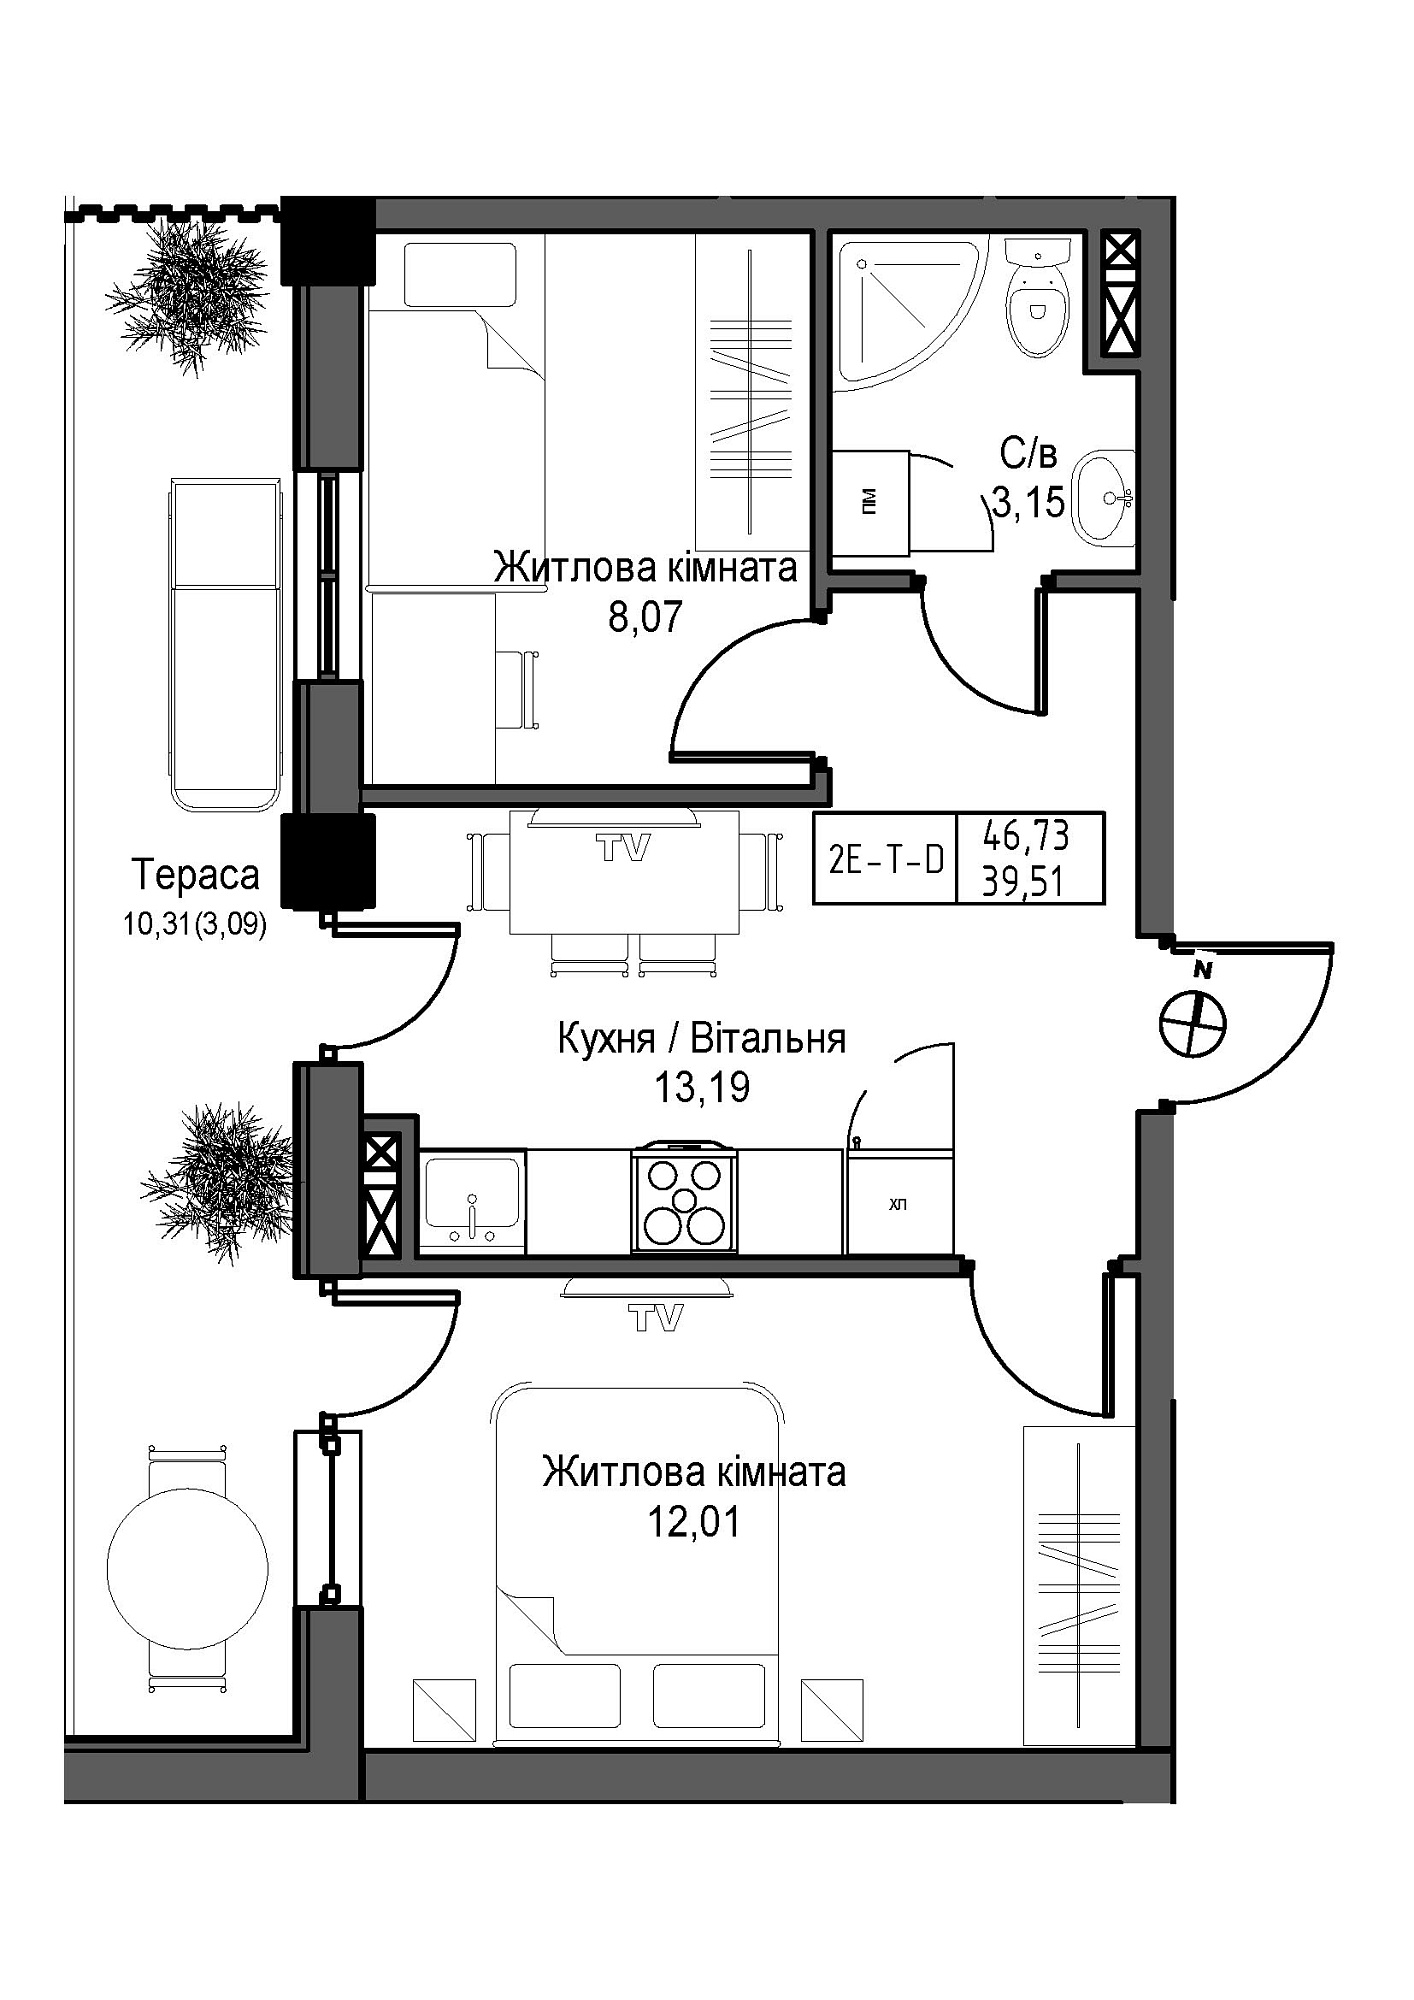 Планування 2-к квартира площею 39.51м2, UM-007-08/0001.